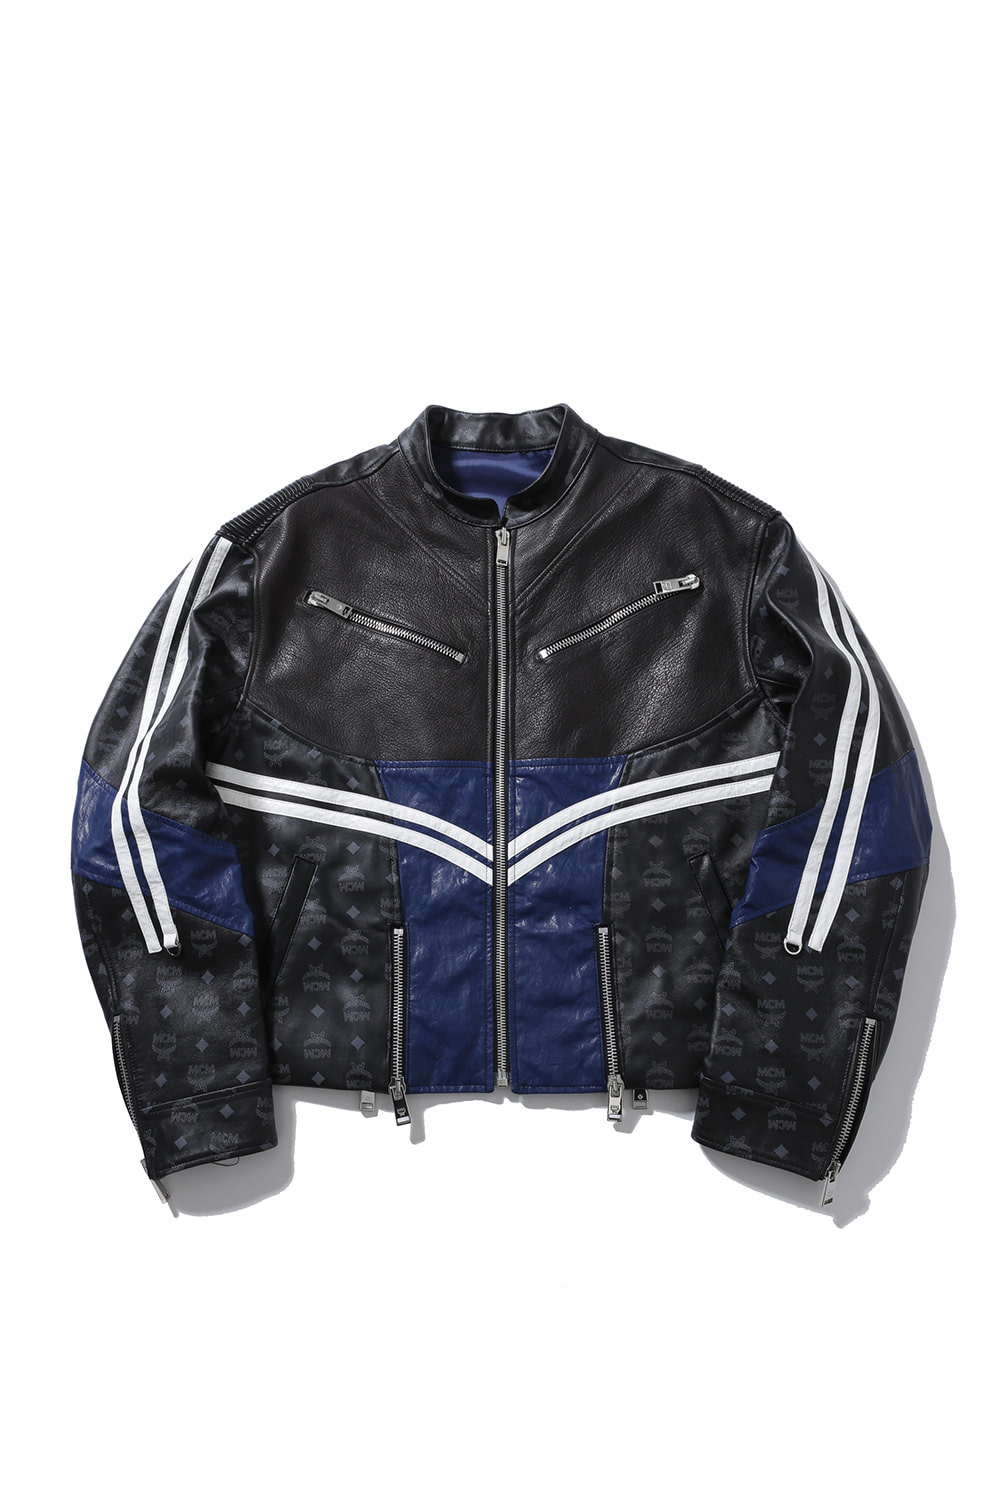 T.B.O.S x MCM Deconstructed racing club jacket 002 (blue)